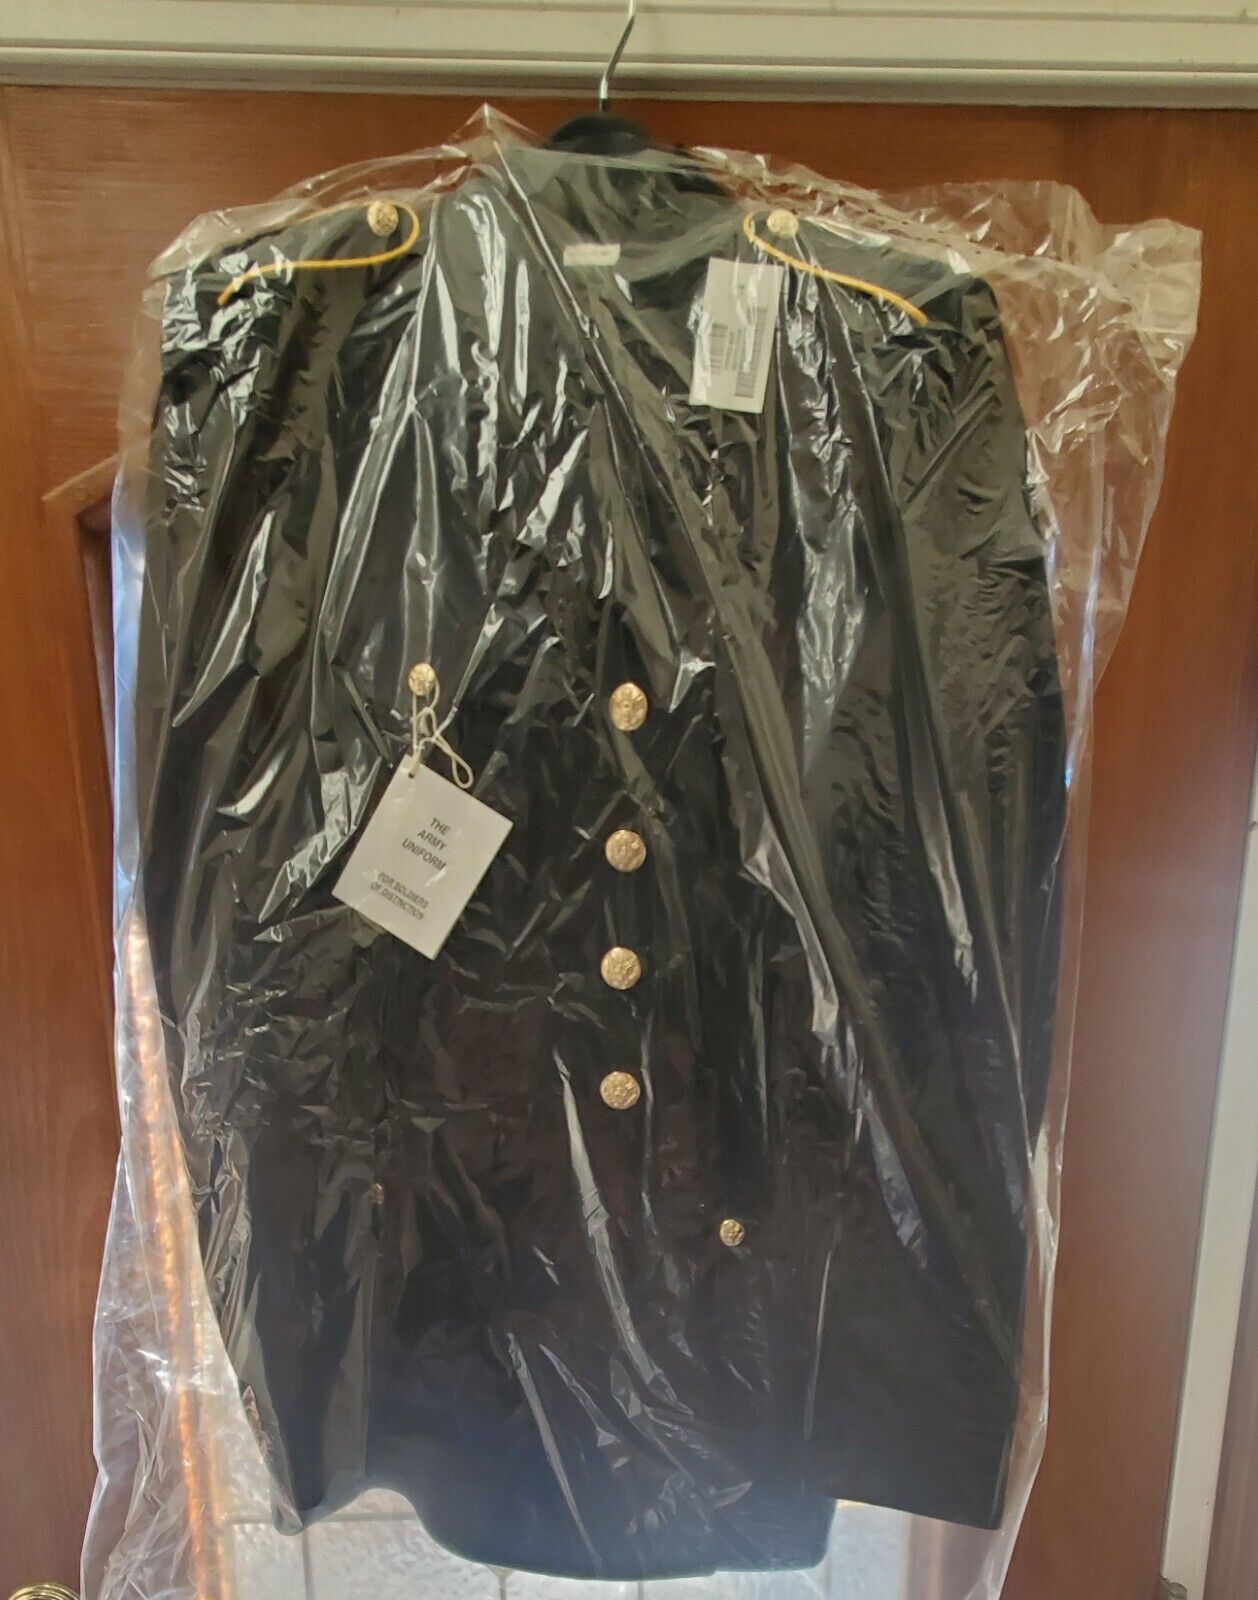 NEW US ARMY MEN'S MILITARY SERVICE DRESS BLUE 37R CLA ASU UNIFORM COAT JACKET